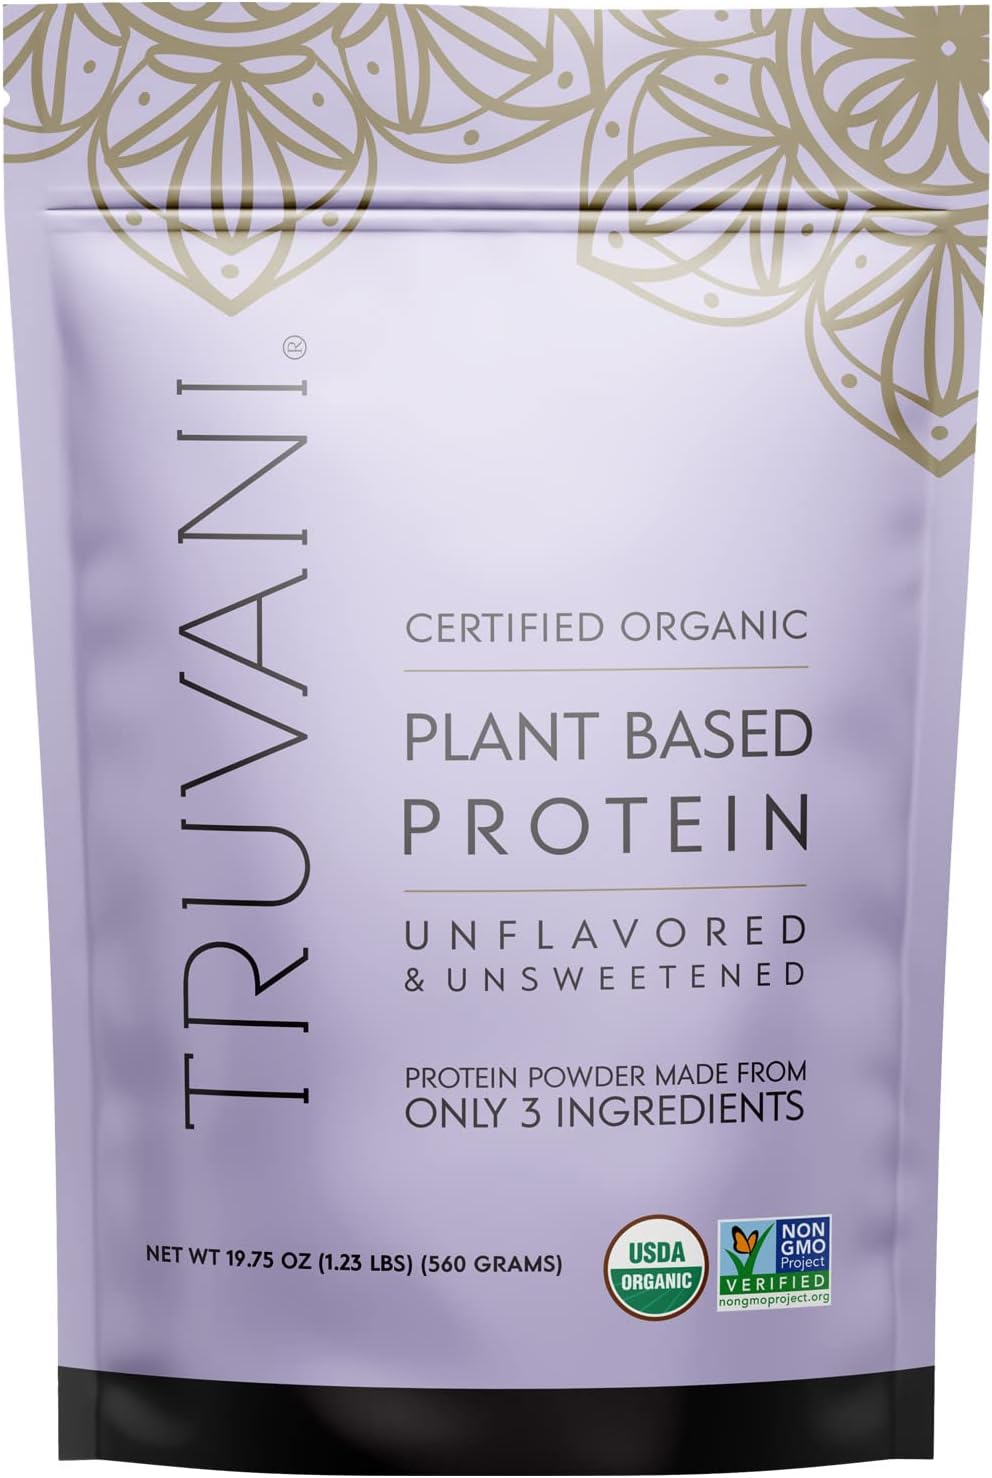 Truvani Plant Based Protein